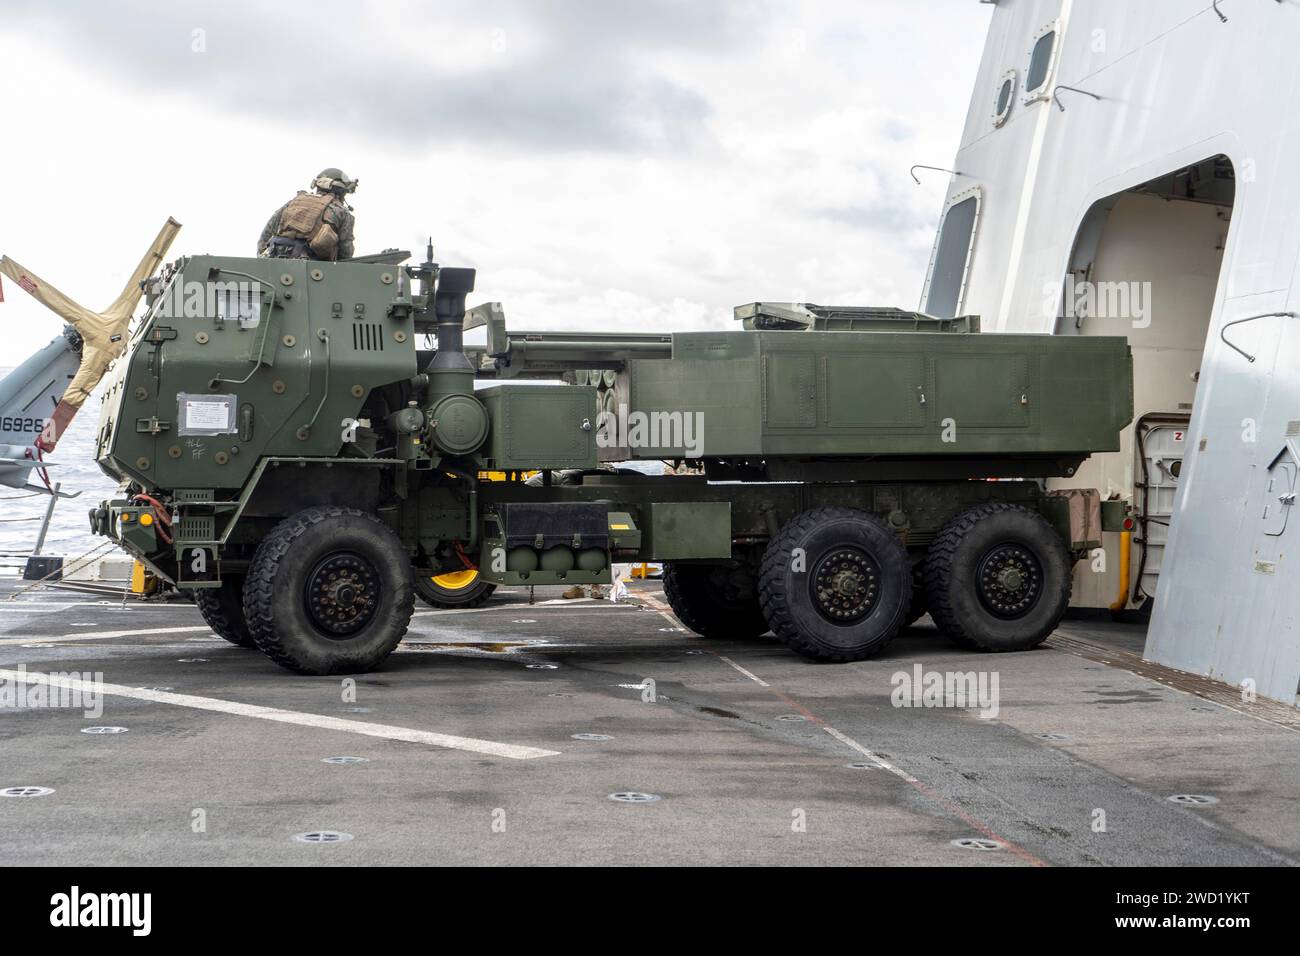 U.S. Marines maneuver a HIMARS vehicle on a flight deck of a ship. Stock Photo